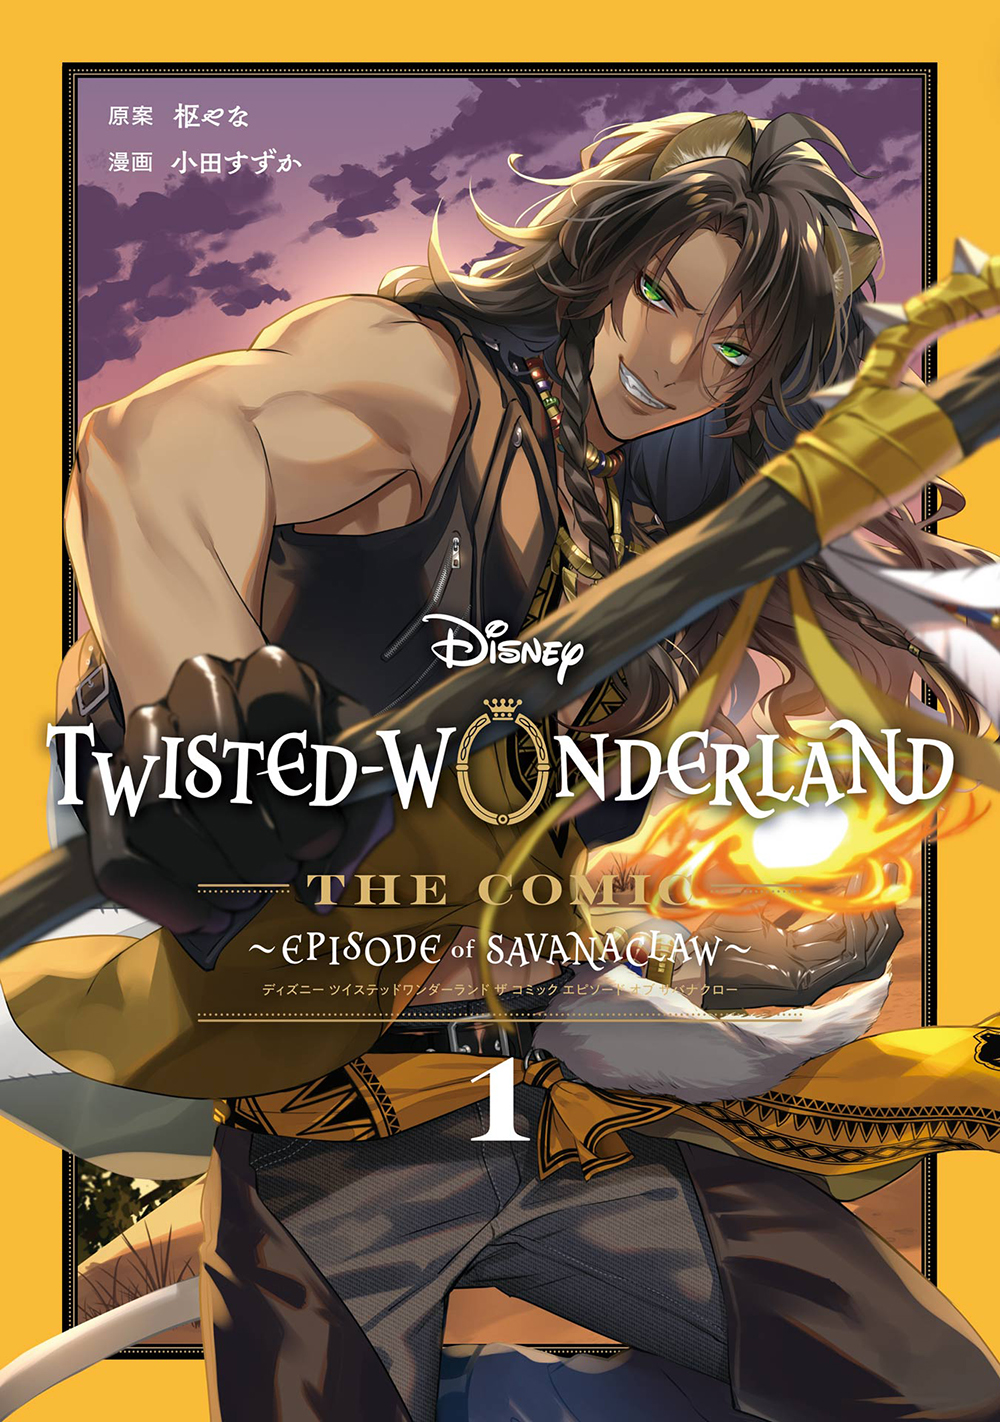 Disney Twisted-Wonderland The Comic Episode of Savanaclaw 1